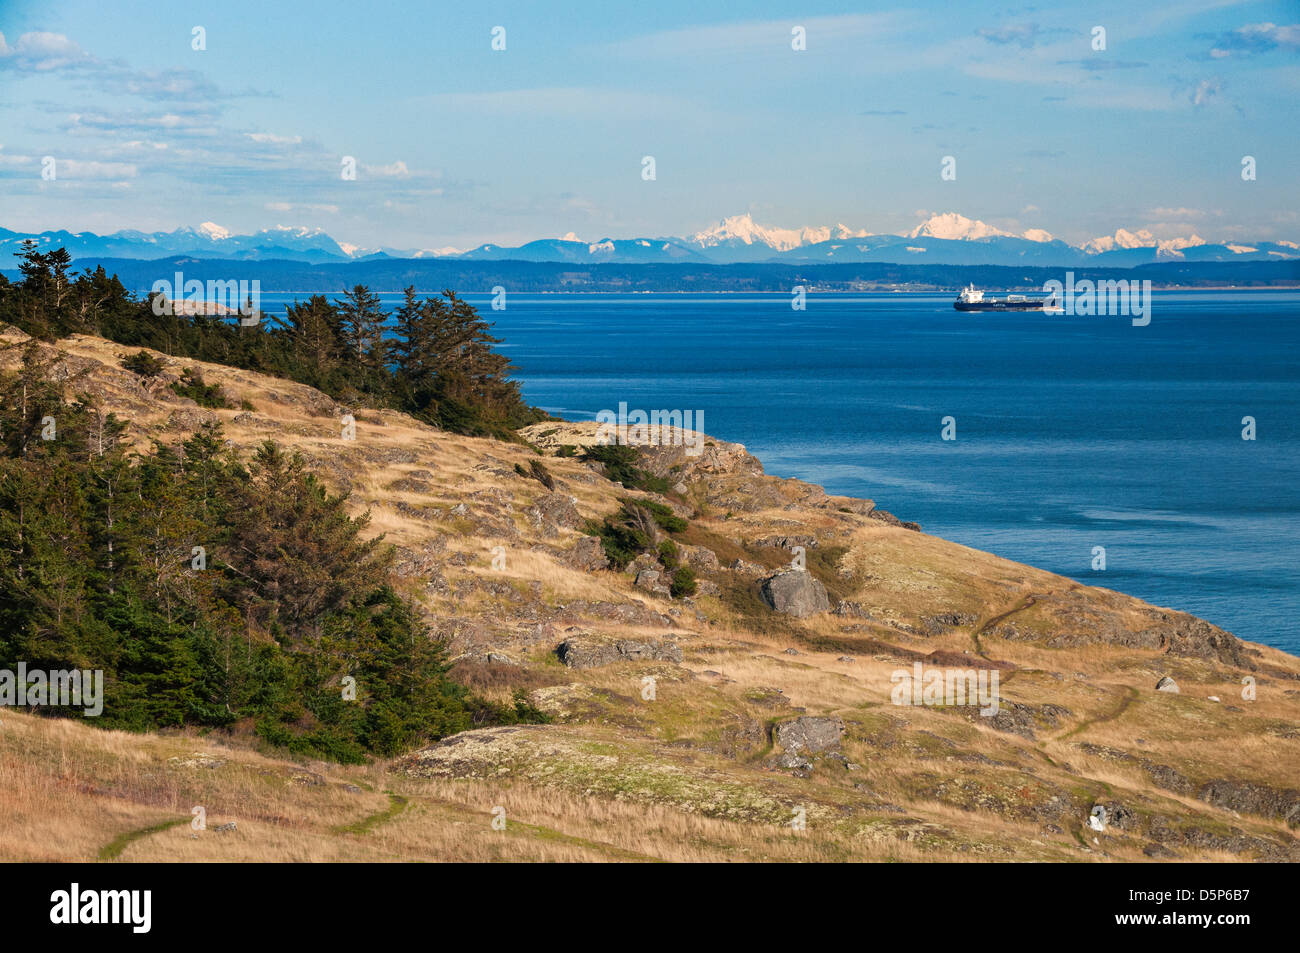 ceberg Point on Lopez Island, part of the San Juan Islands National Monument, Washington. Stock Photo